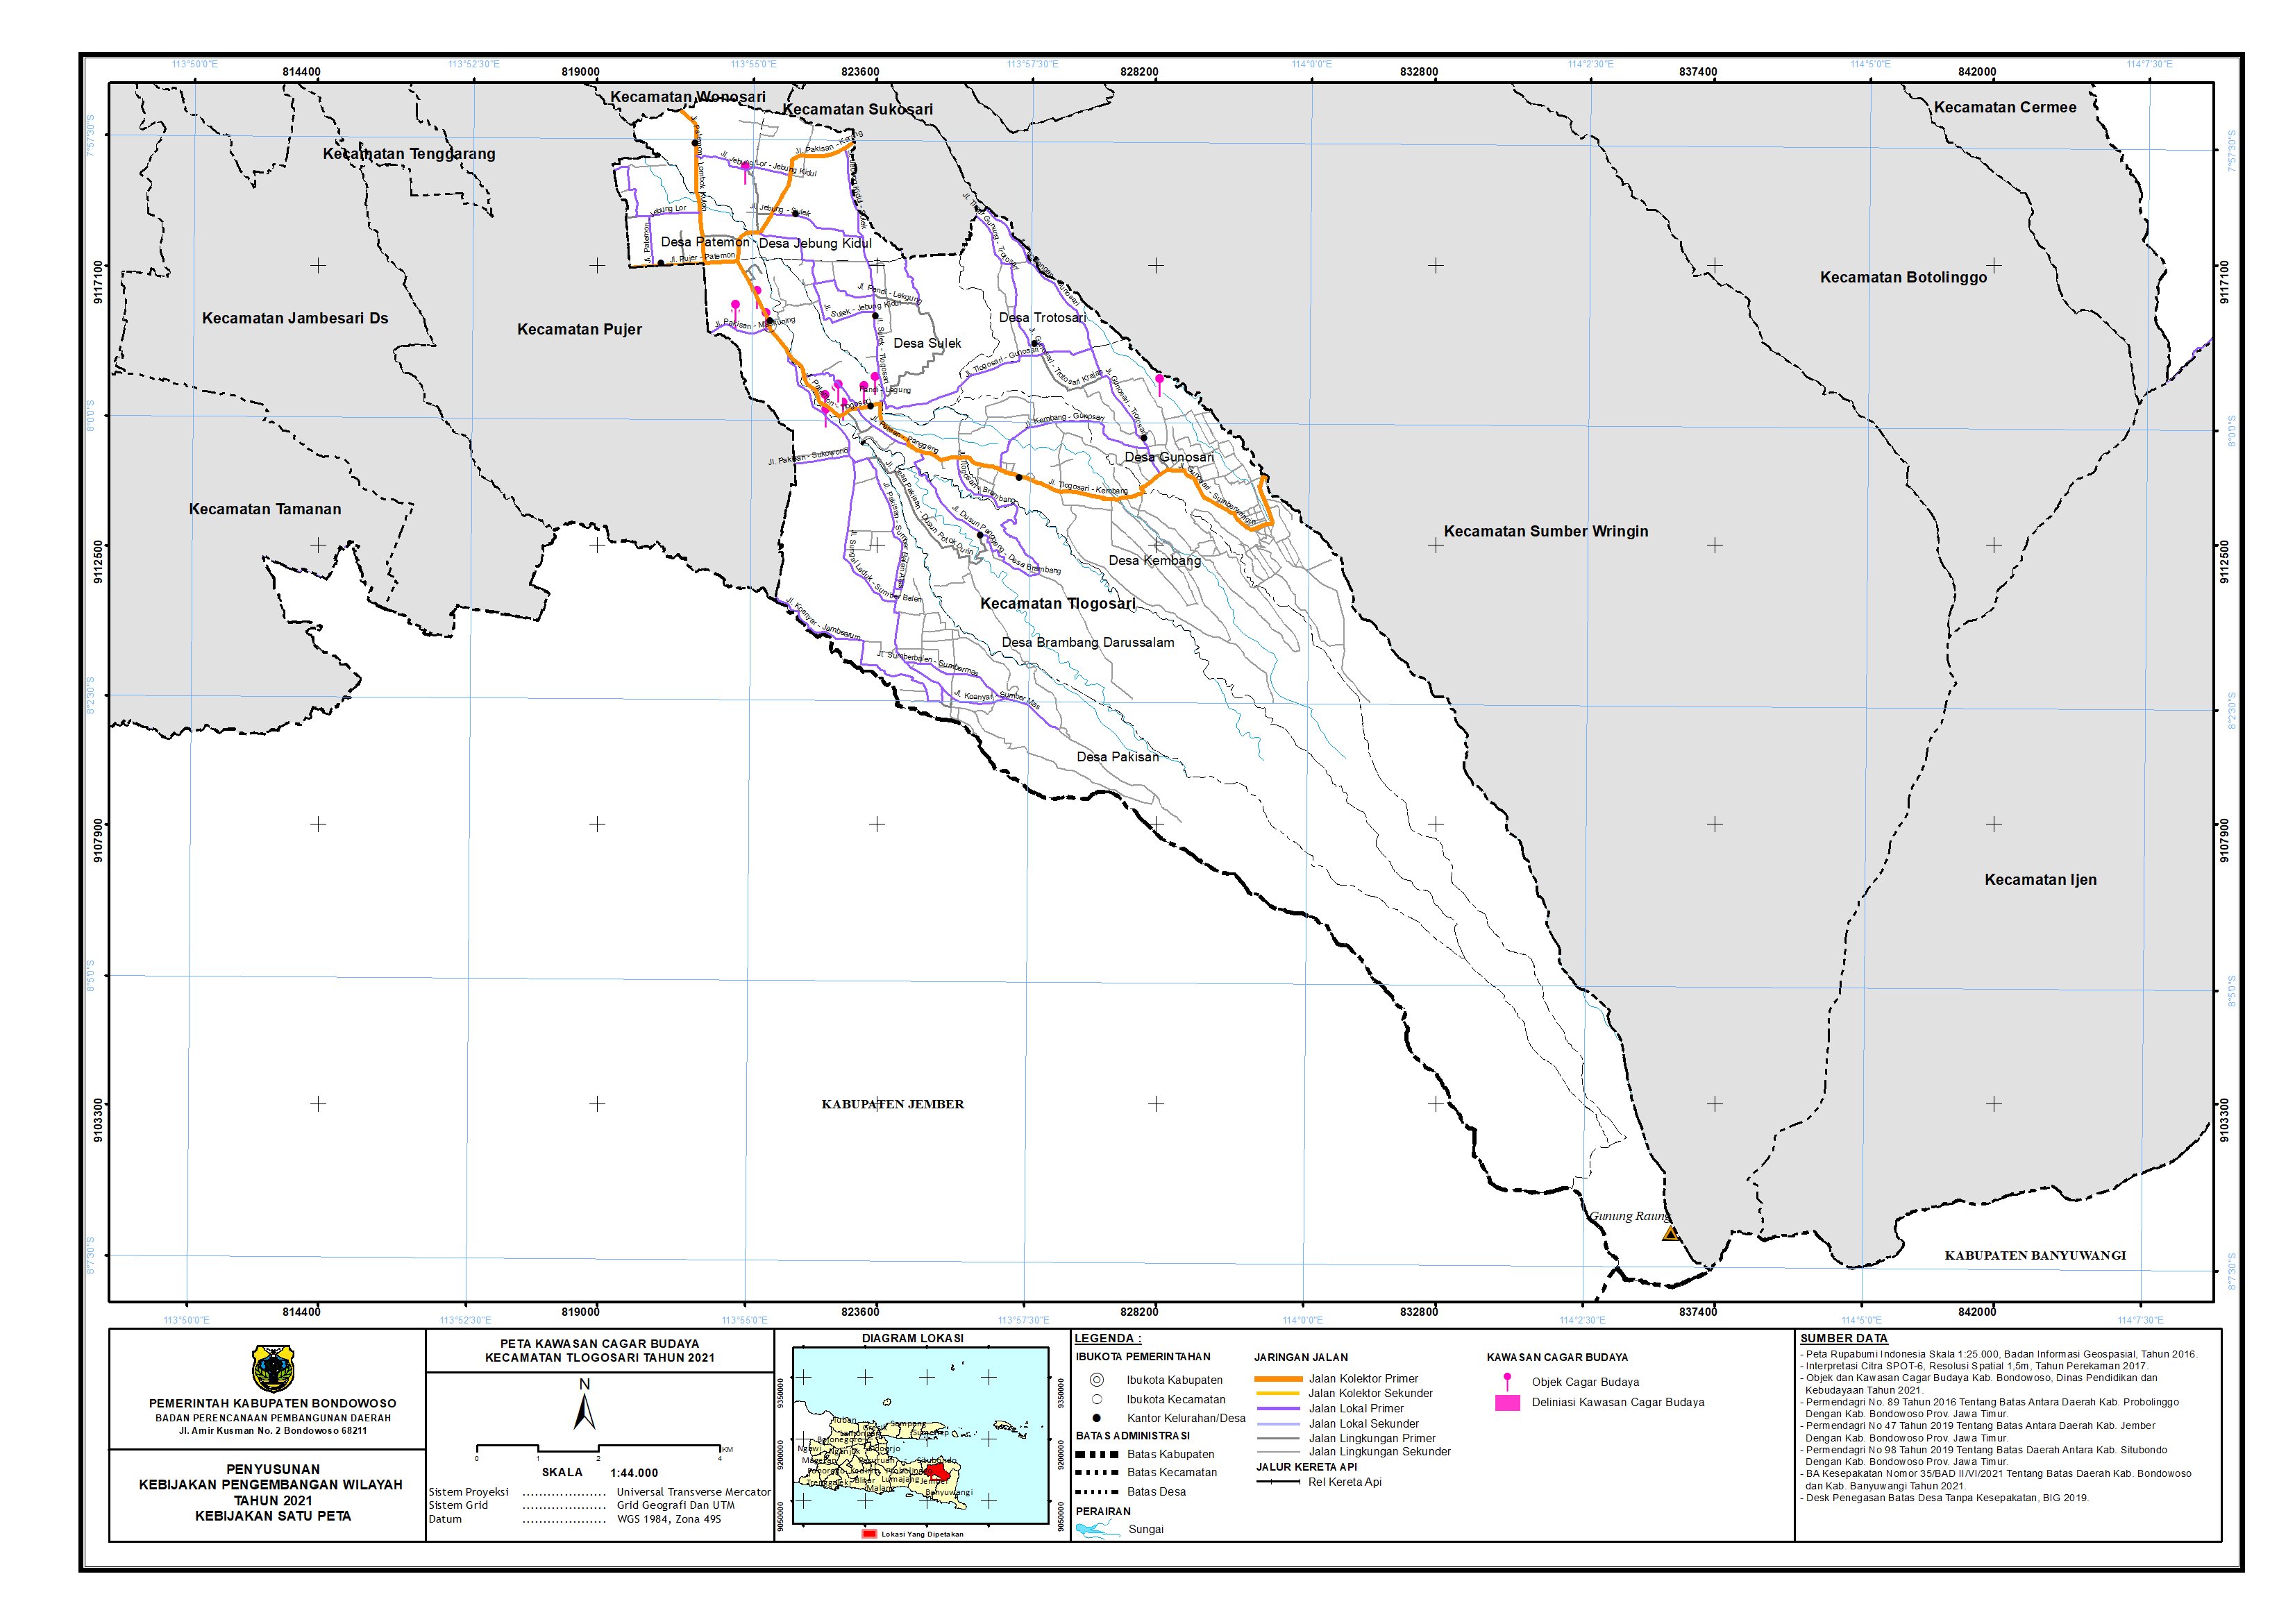 Peta Kawasan Cagar Budaya Kecamatan Tlogosari.png